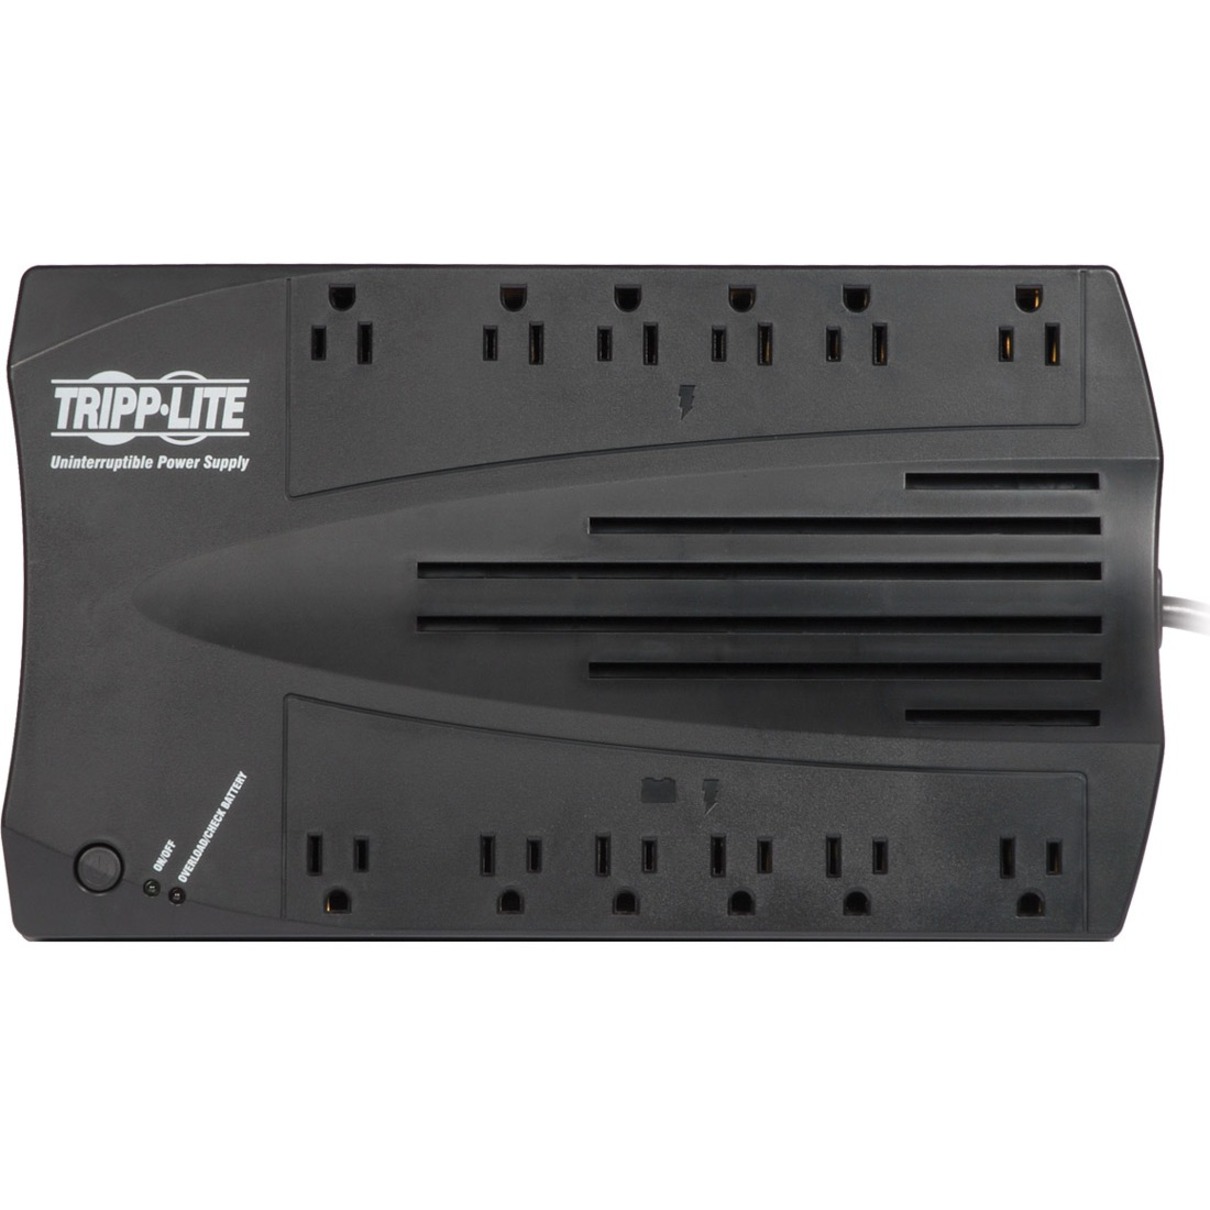 Tripp Lite by Eaton UPS 750VA 450W Desktop Battery Back Up AVR Compact 120V USB RJ11 TAA - image 4 of 9